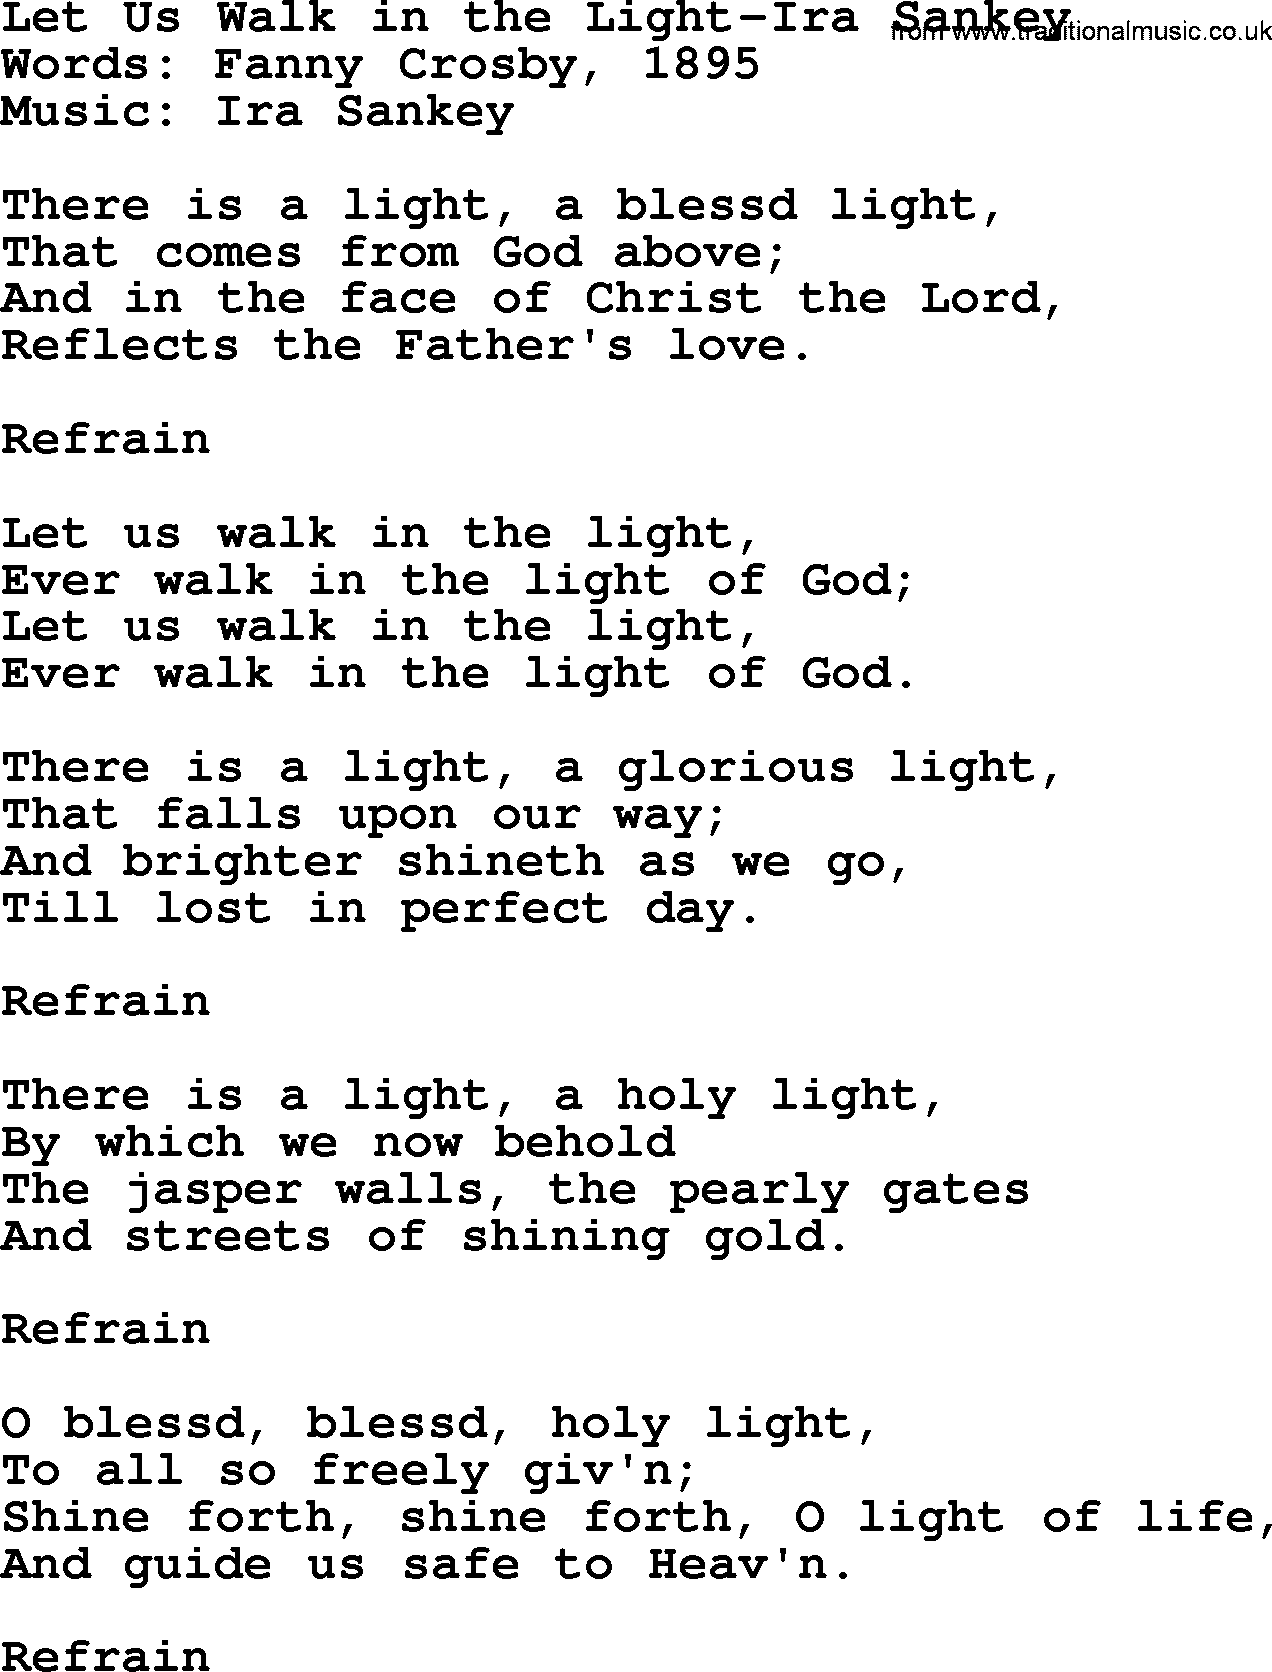 Ira Sankey hymn: Let Us Walk in the Light-Ira Sankey, lyrics